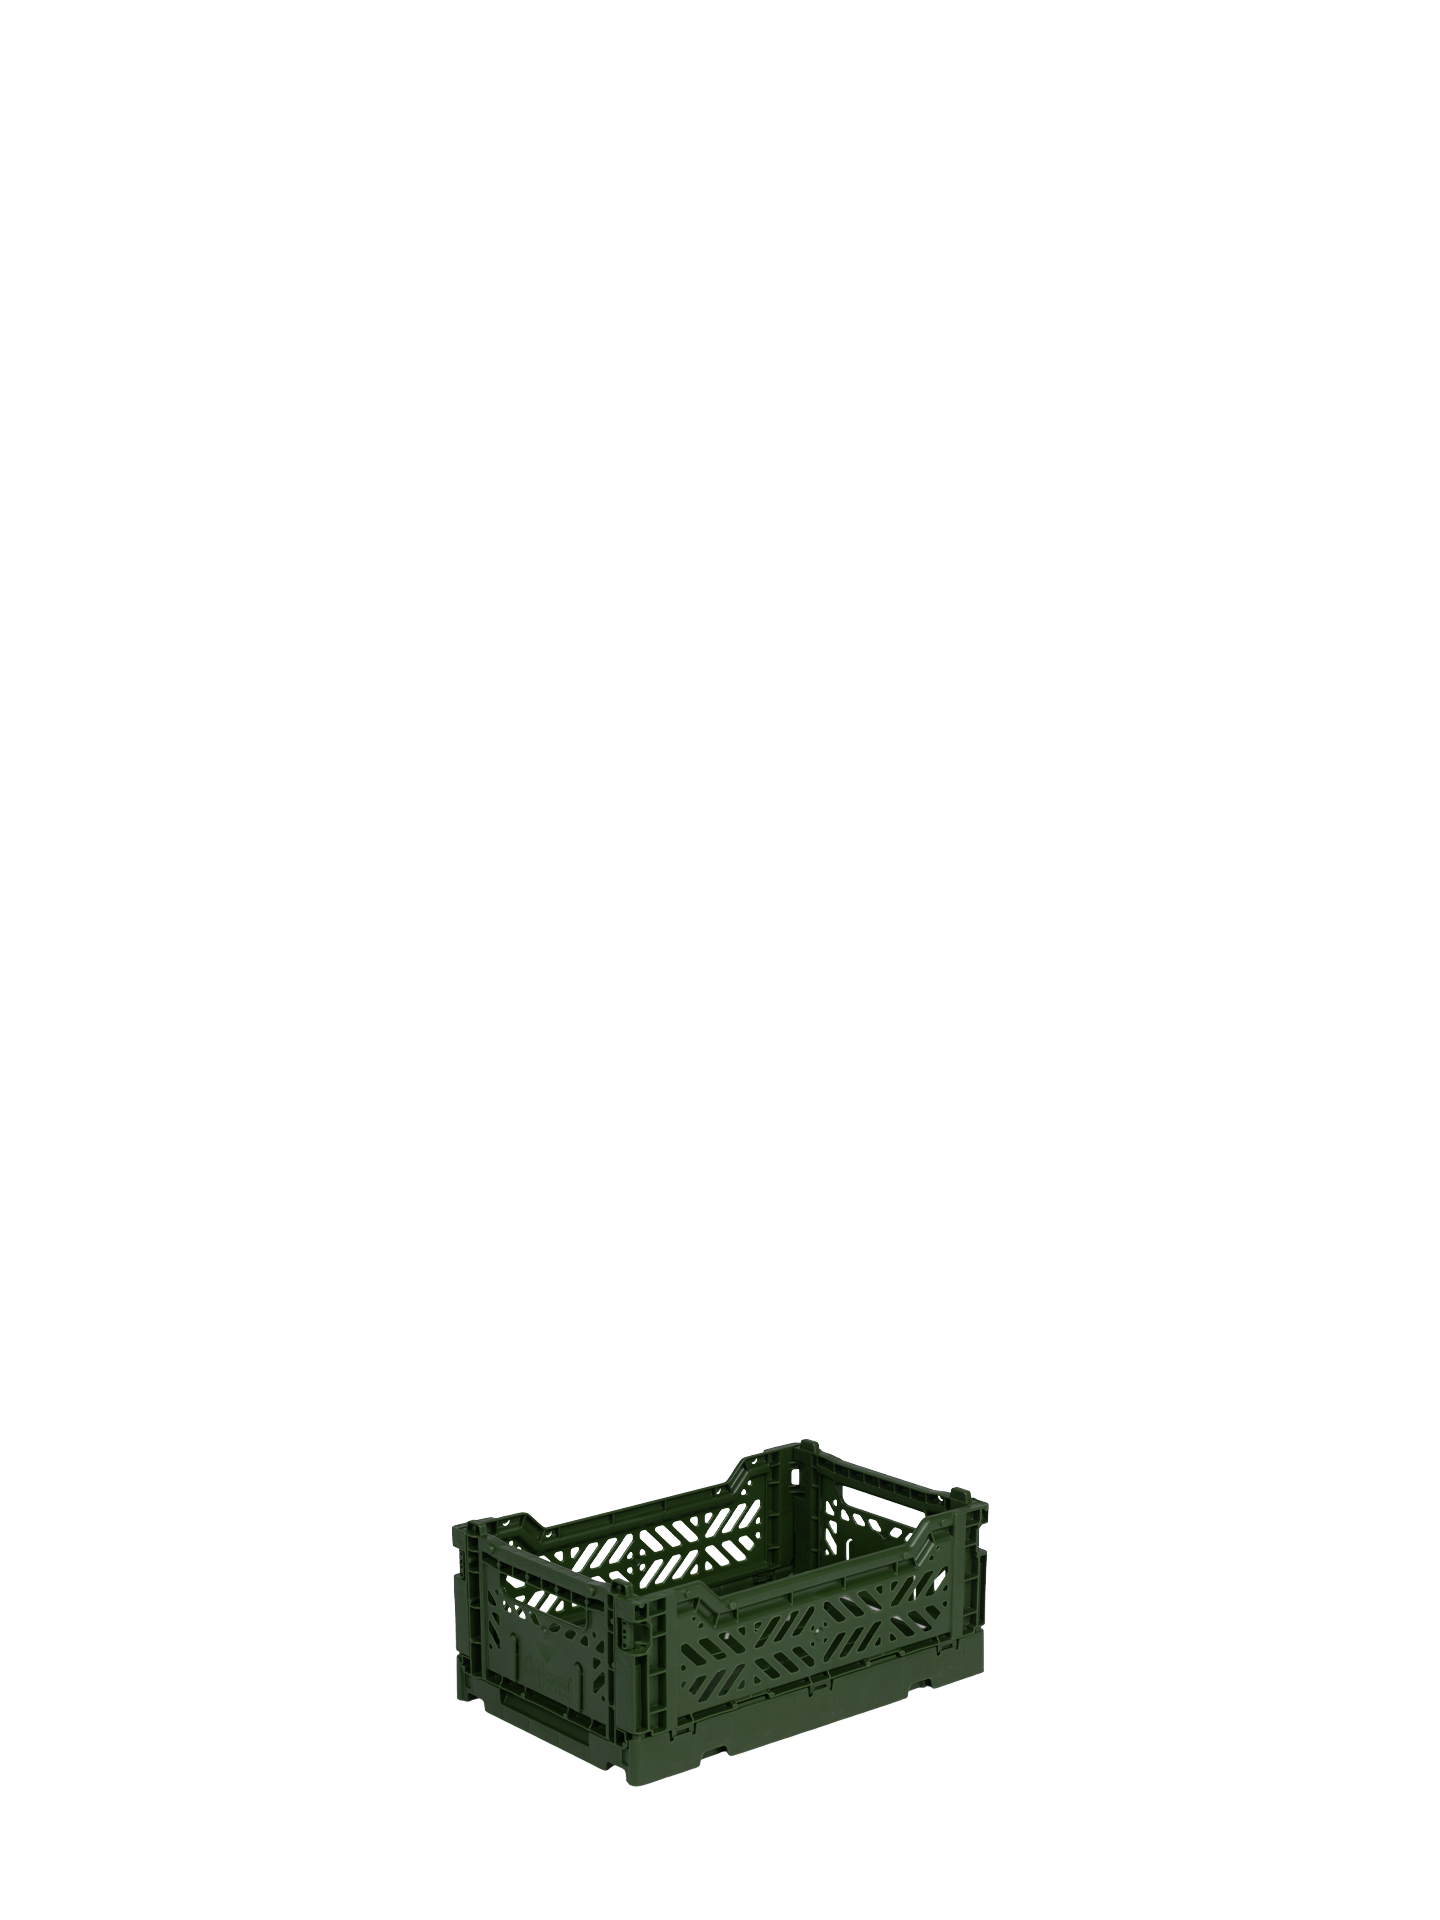 Mini Aykasa crate in dark khaki green stacks and folds